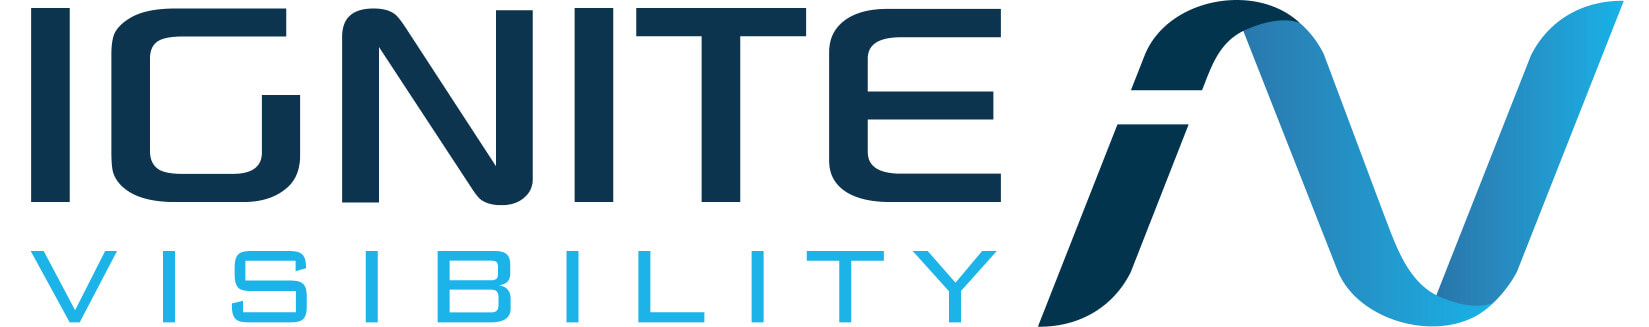 Top Medical SEO Company Logo: Ignite Visibility